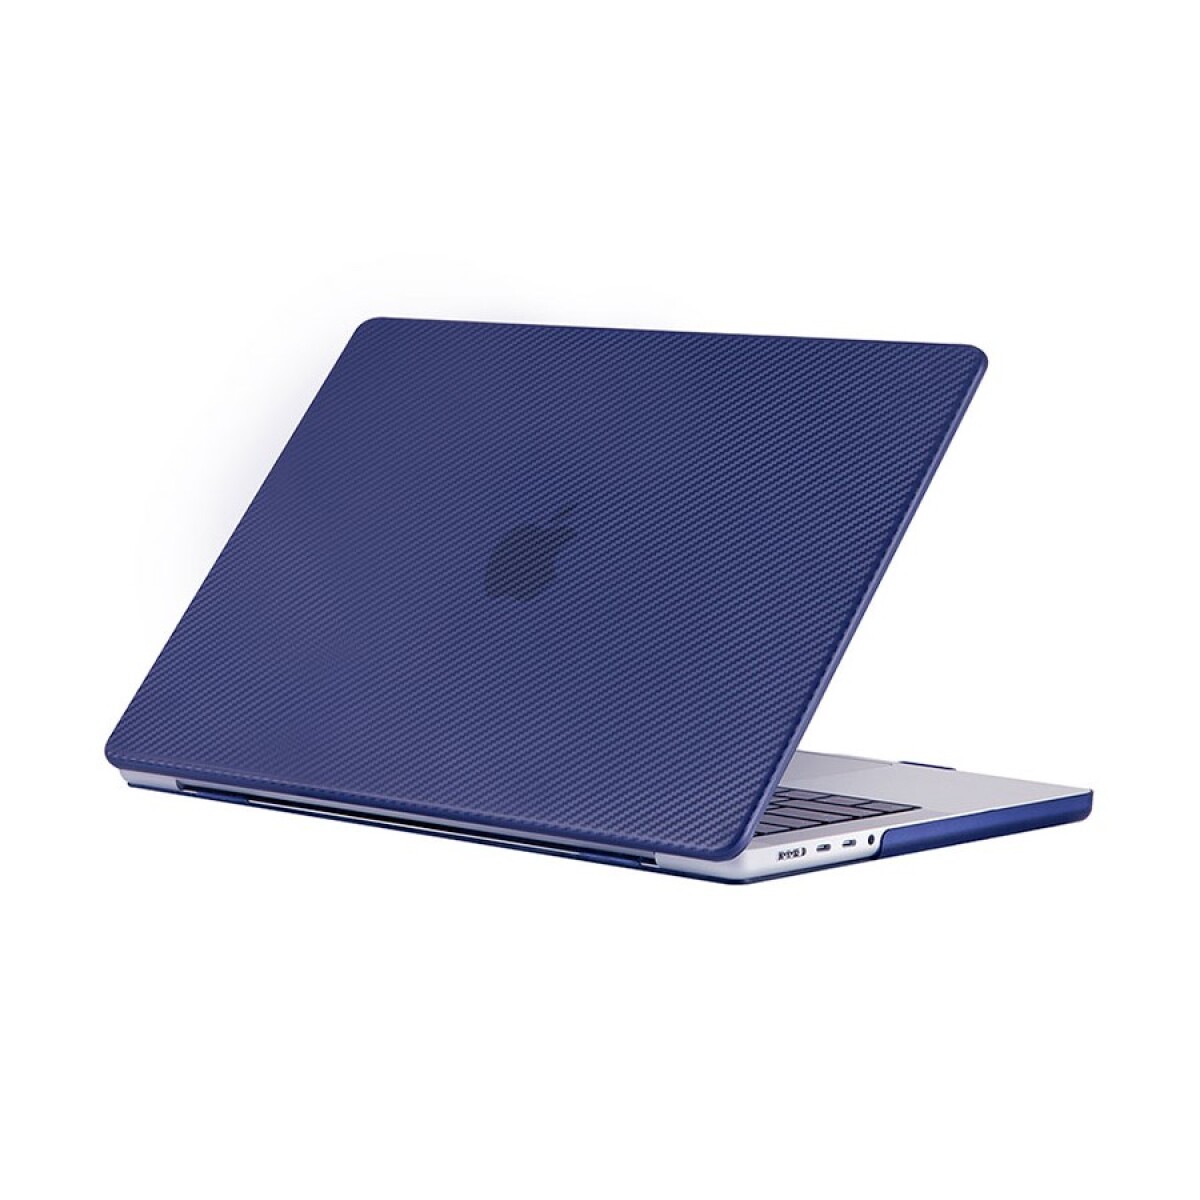 Carcasa protector hardsell fibra carbono para macbook 14.2' devia Peony blue